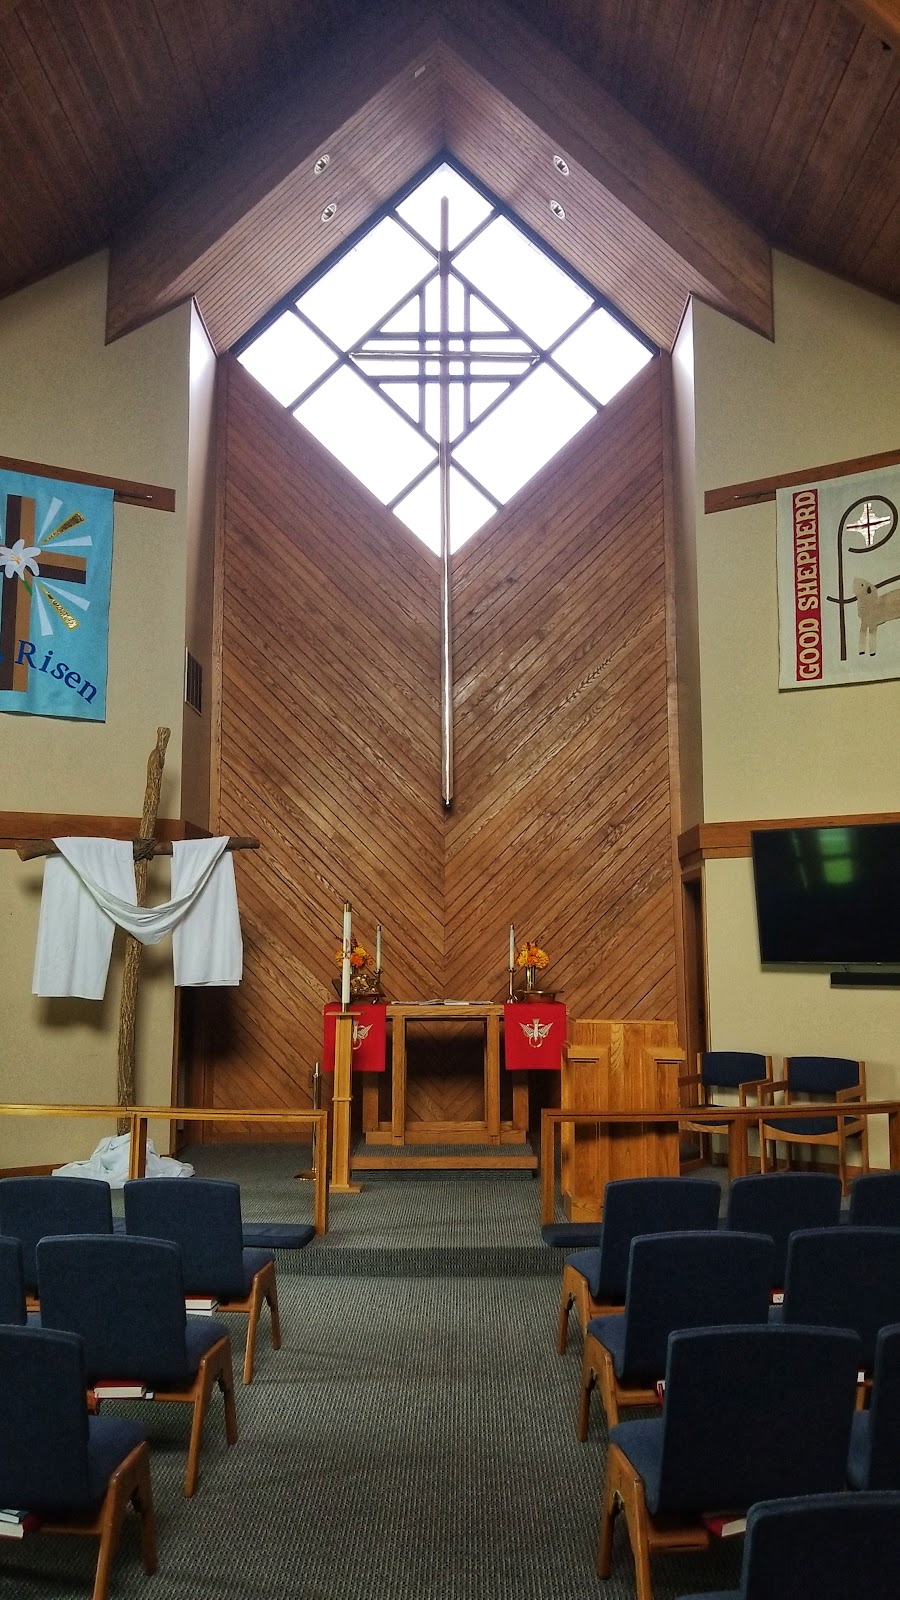 Good Shepherd Lutheran Church | 41415 W 9 Mile Rd, Novi, MI 48375, USA | Phone: (248) 349-0565